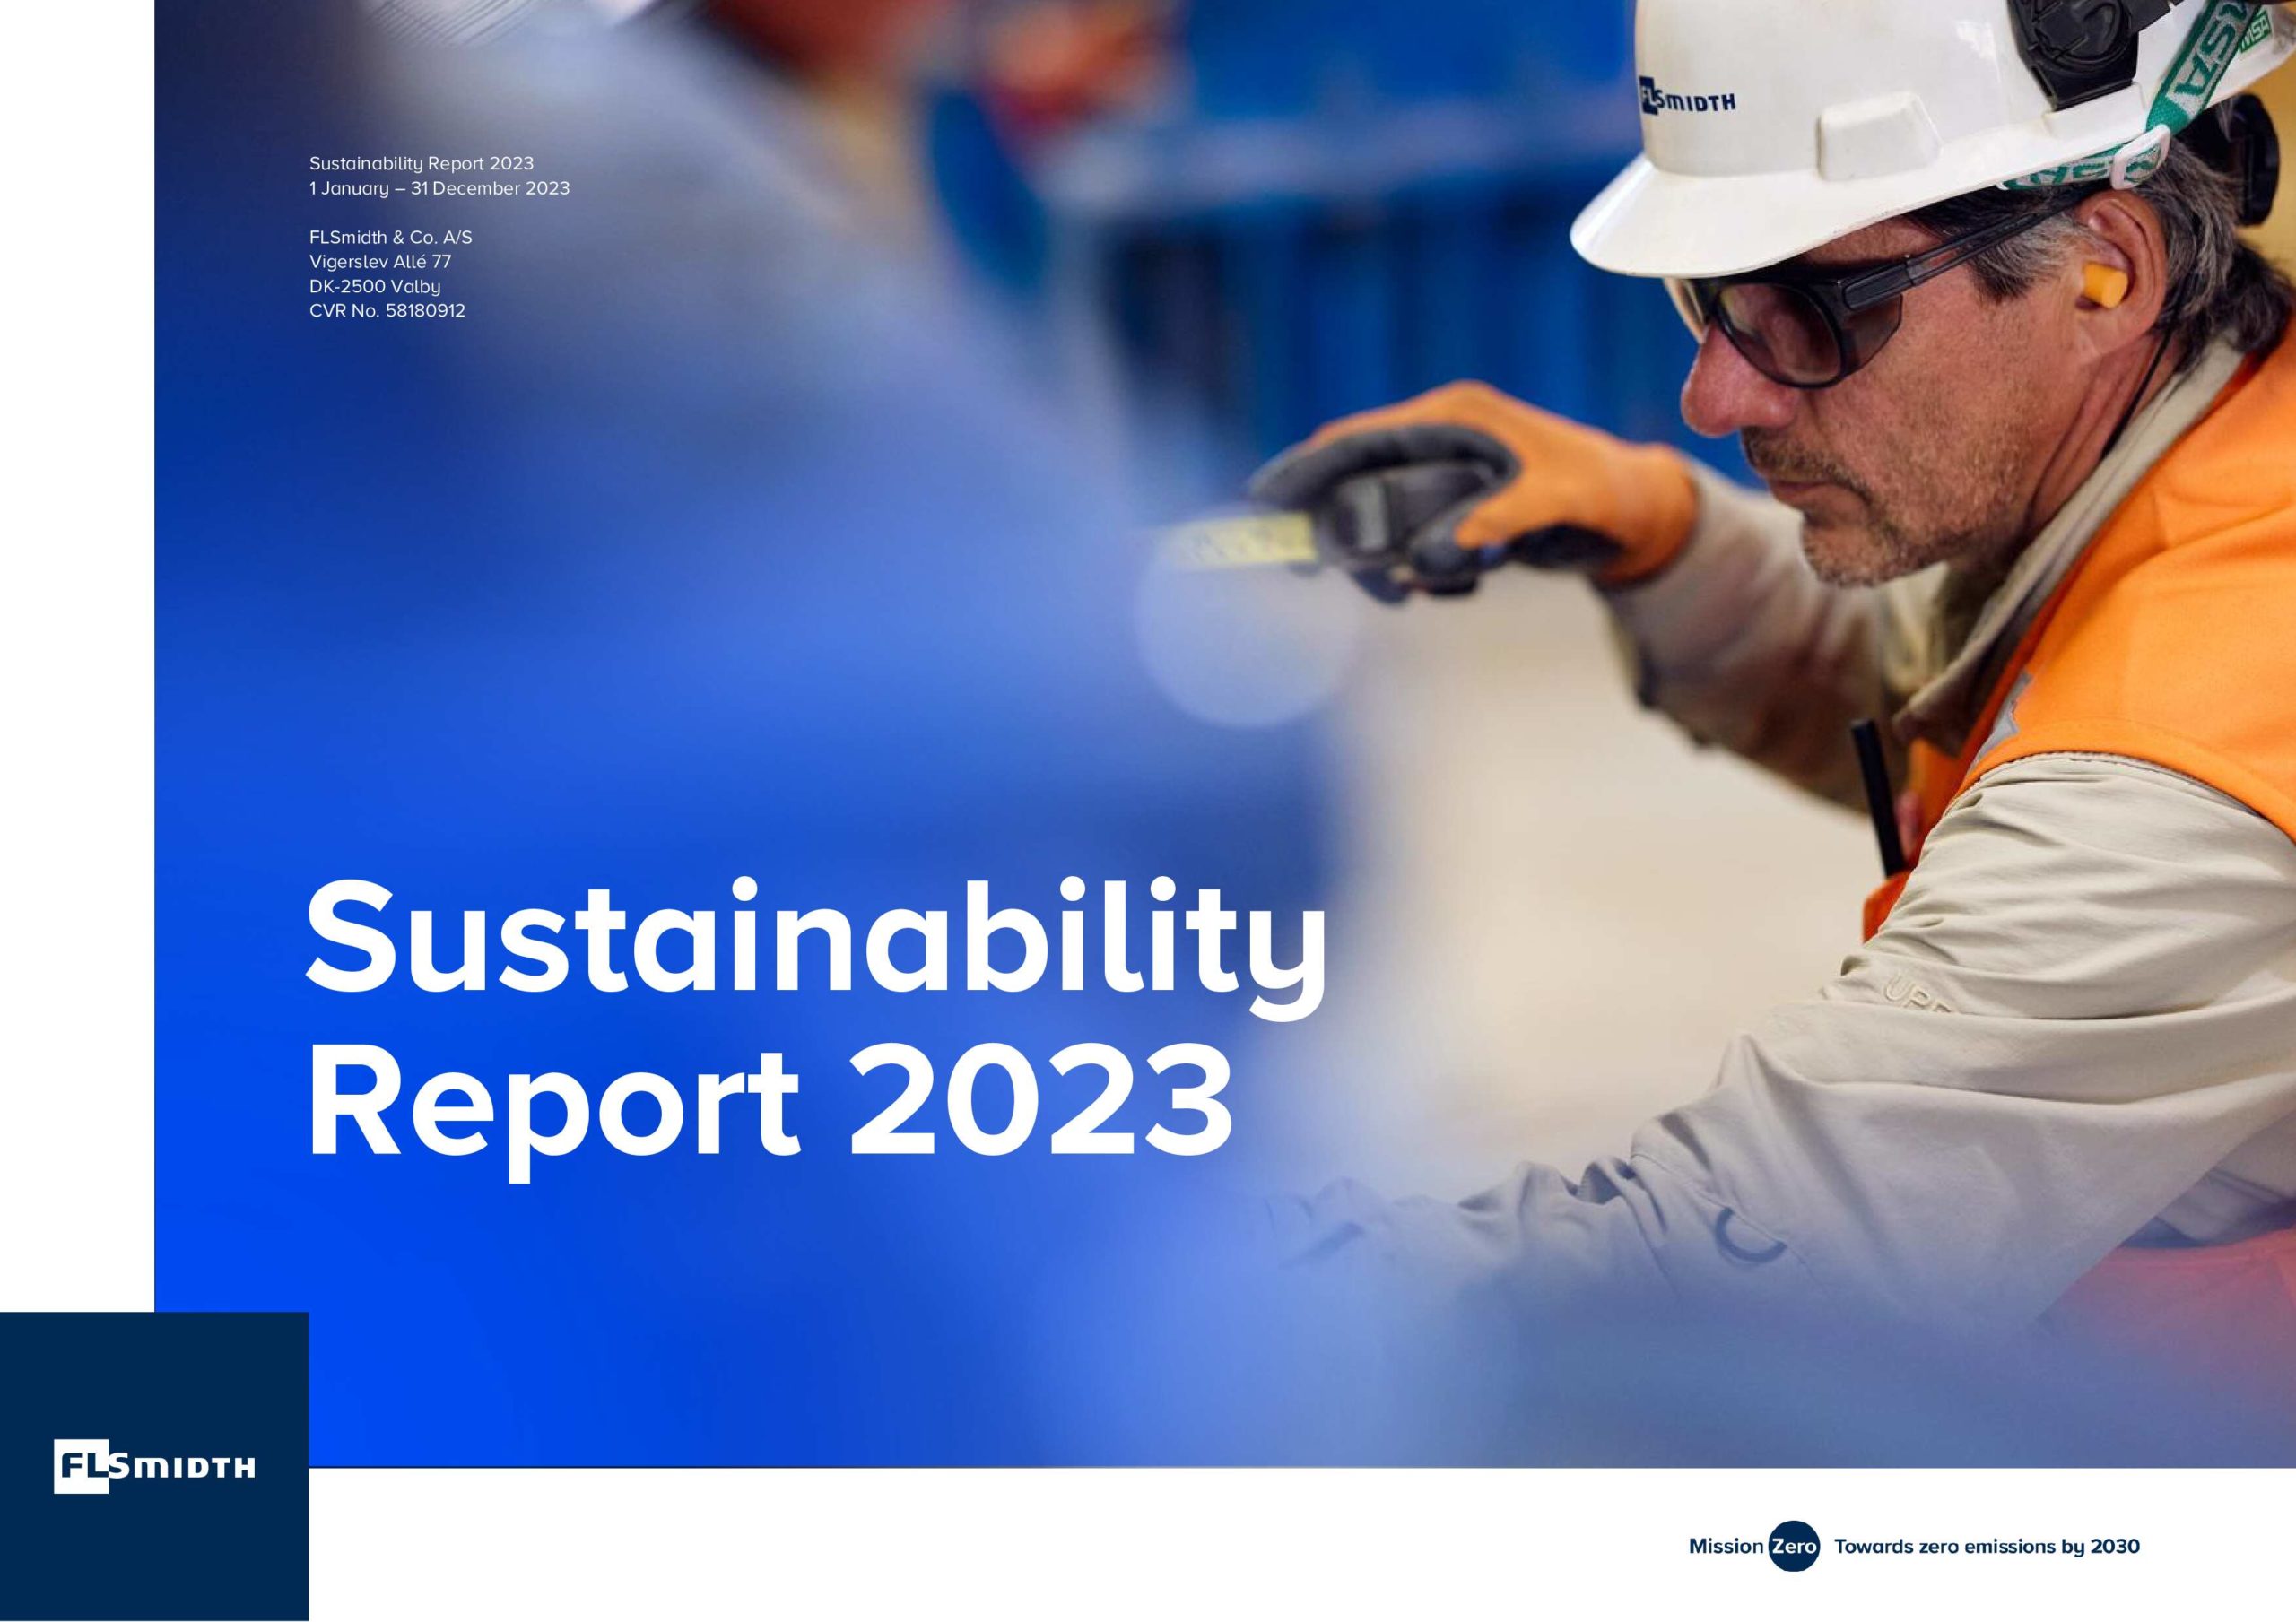 FLSmidth Sustainability Report 2023